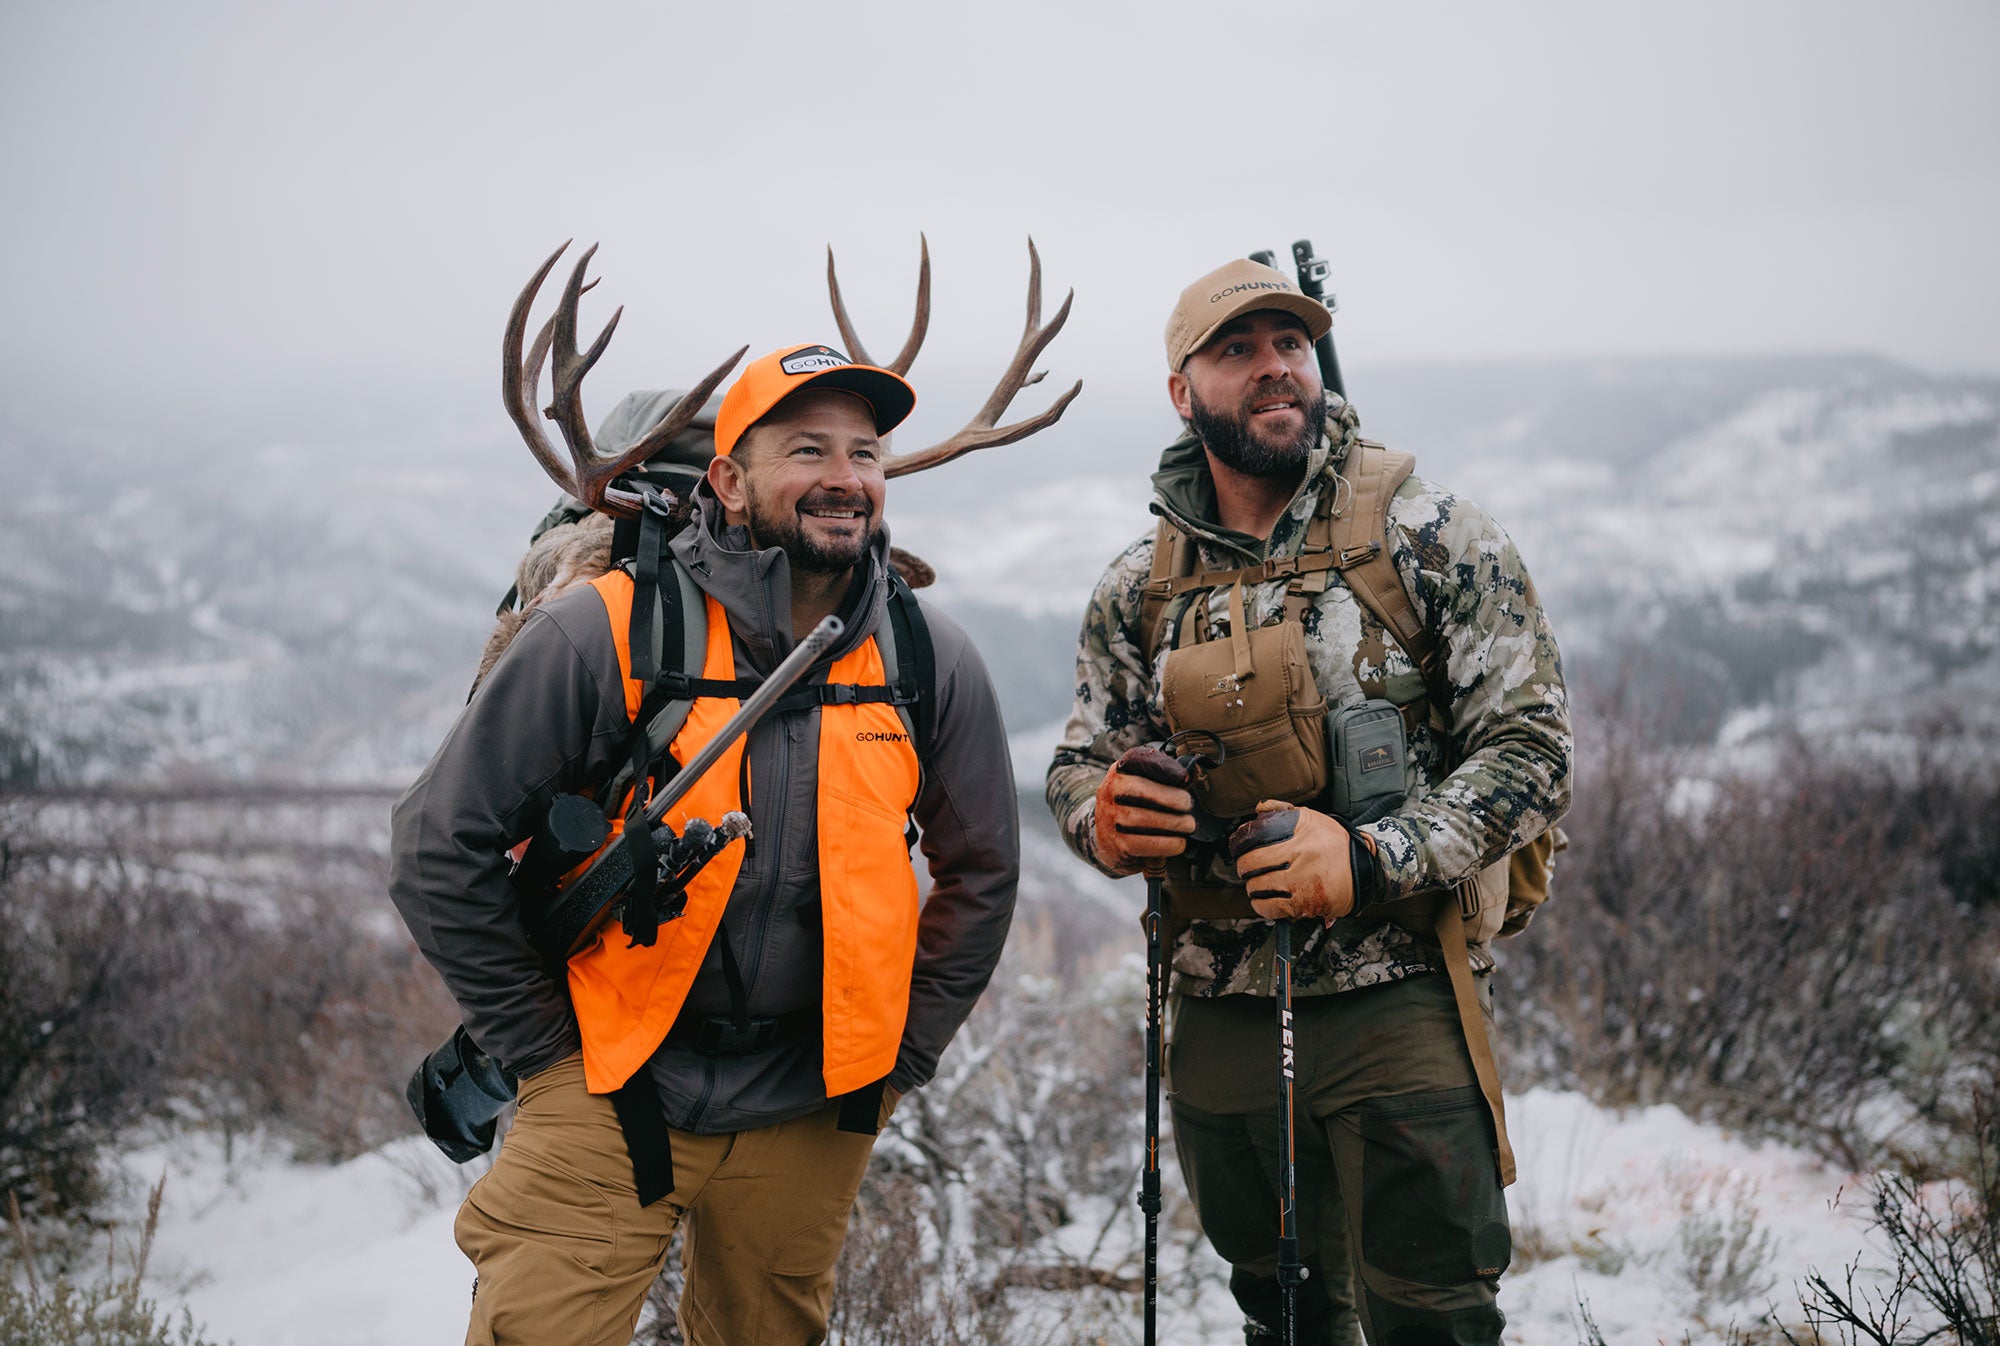 GOHUNT President Chris Porter and Founder Lorenzo Sartini on a Colorado mule deer hunt. Photo by Luke Dusenbury.